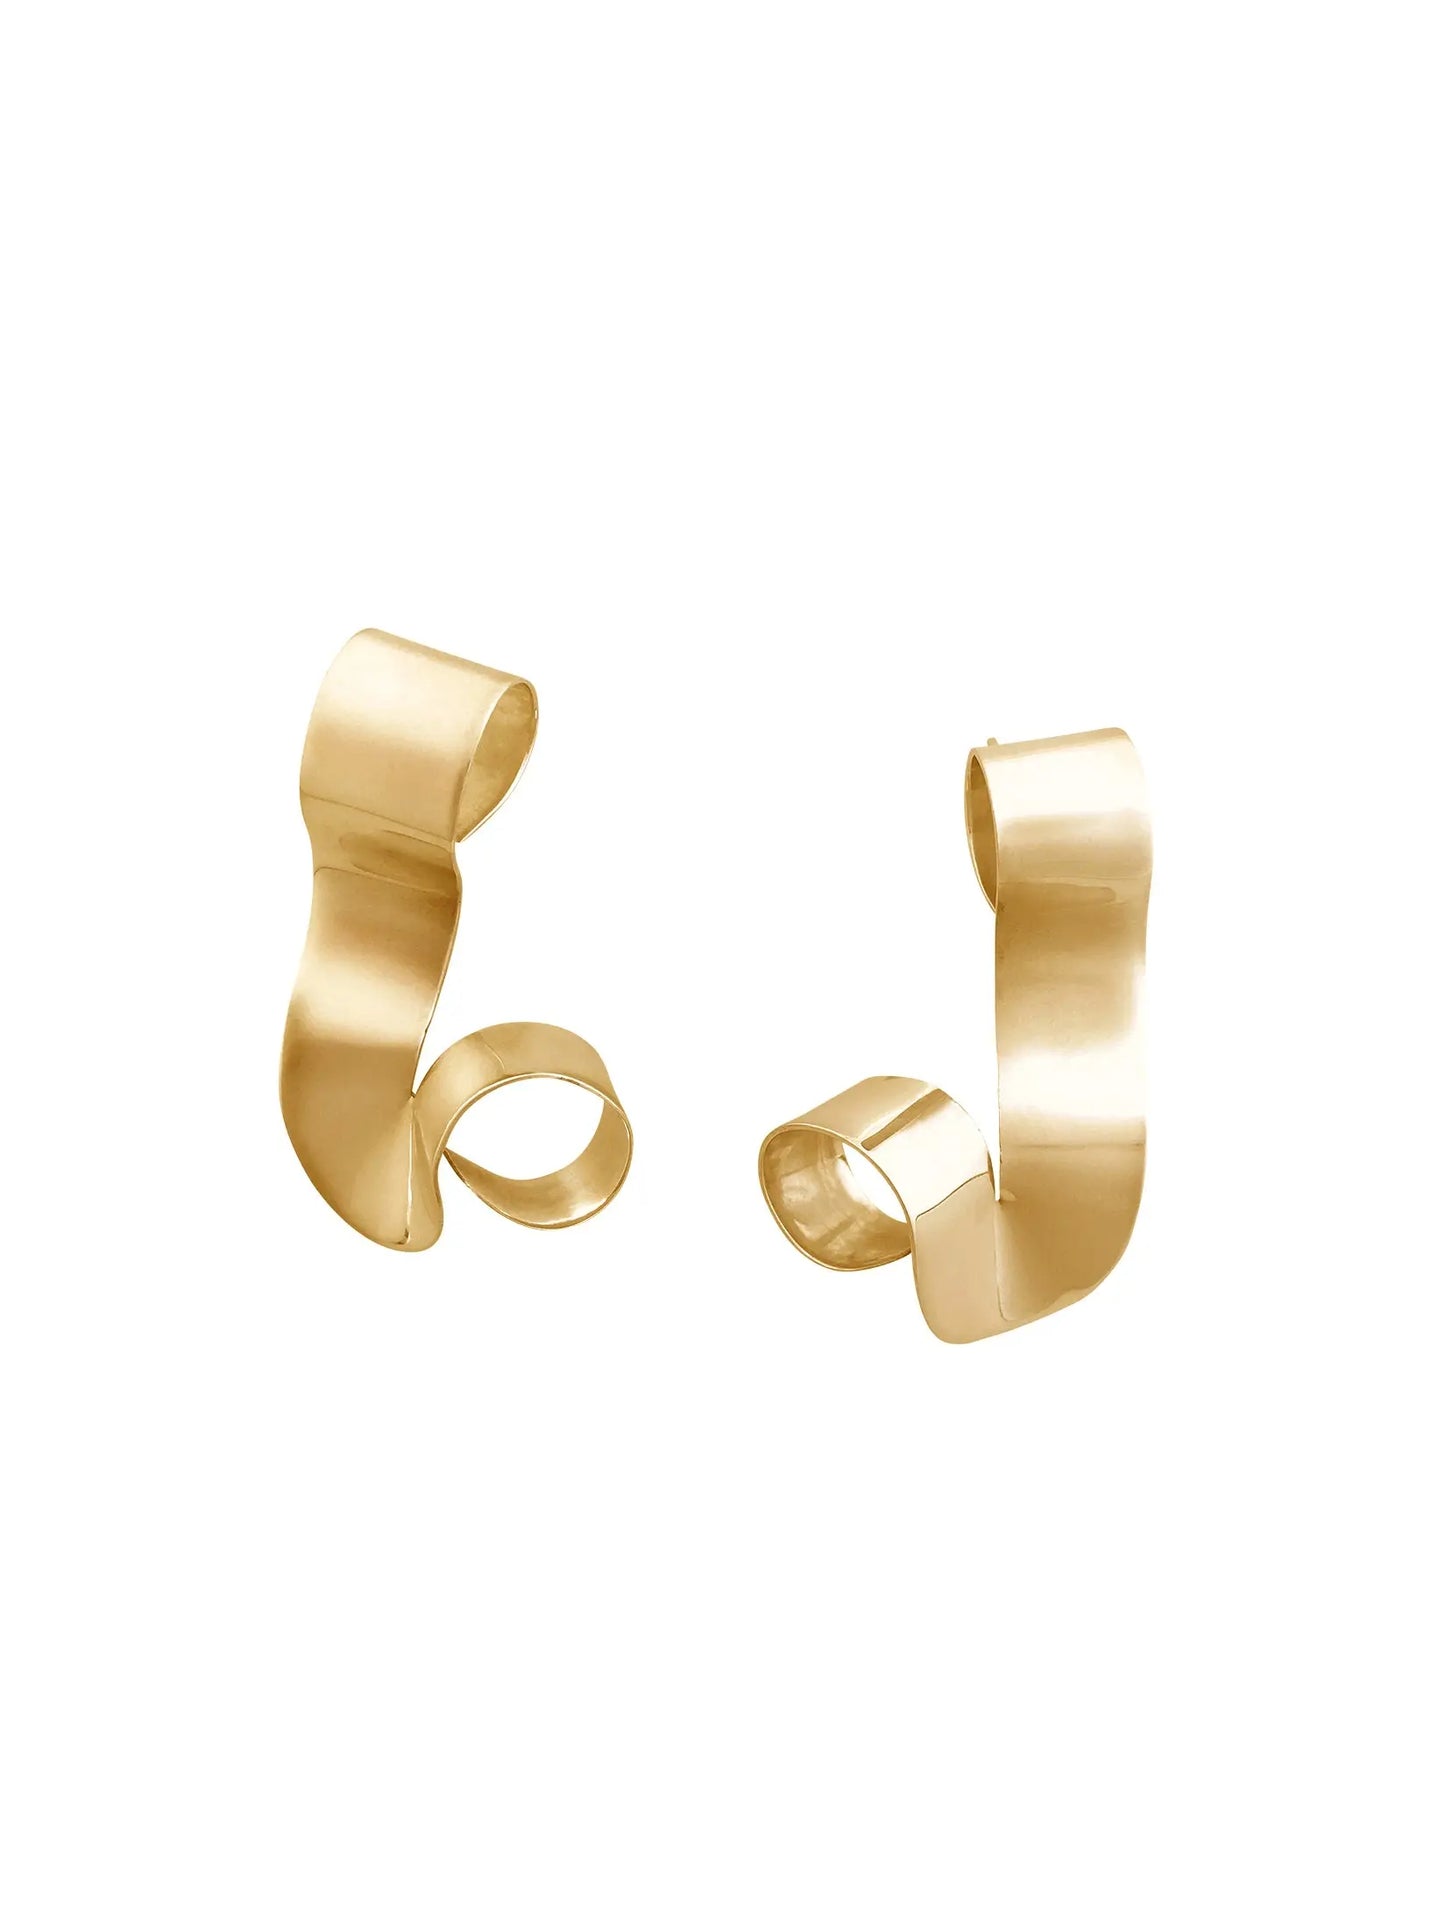 Curled Earrings In Gold Vermeil Sara Robertsson Jewellery